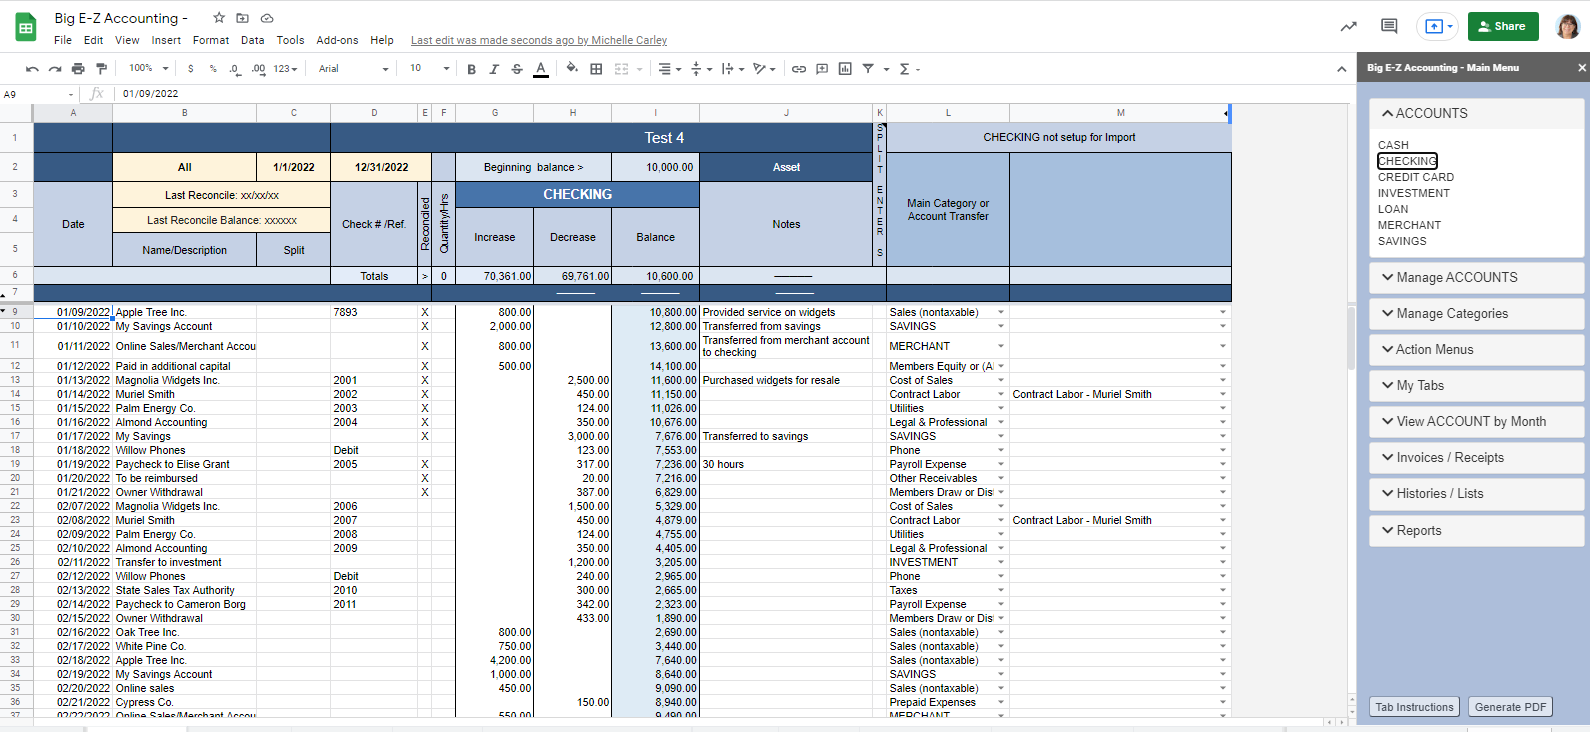 Big E-Z Accounting for Google Sheets Software - Checking Ledger